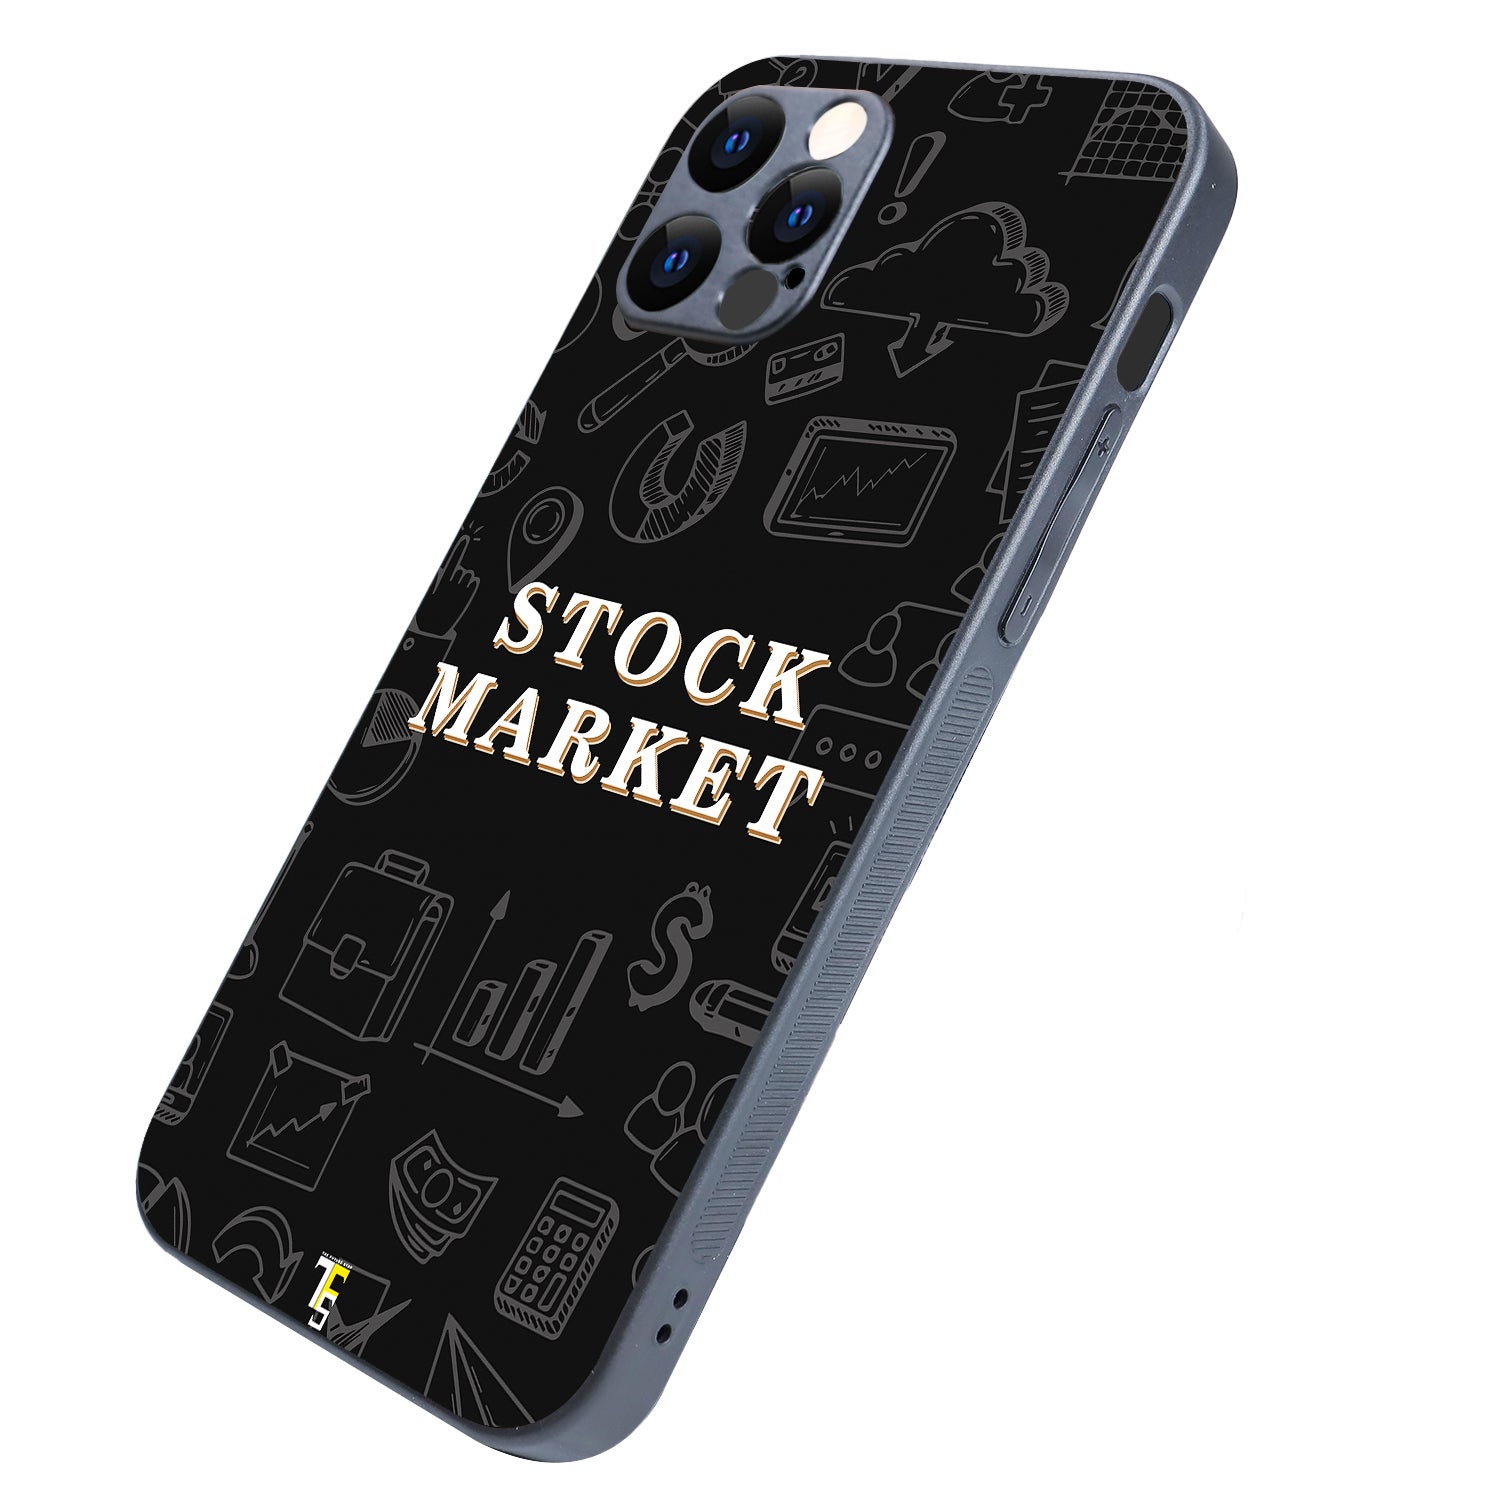 Stock Market Trading iPhone 12 Pro Case